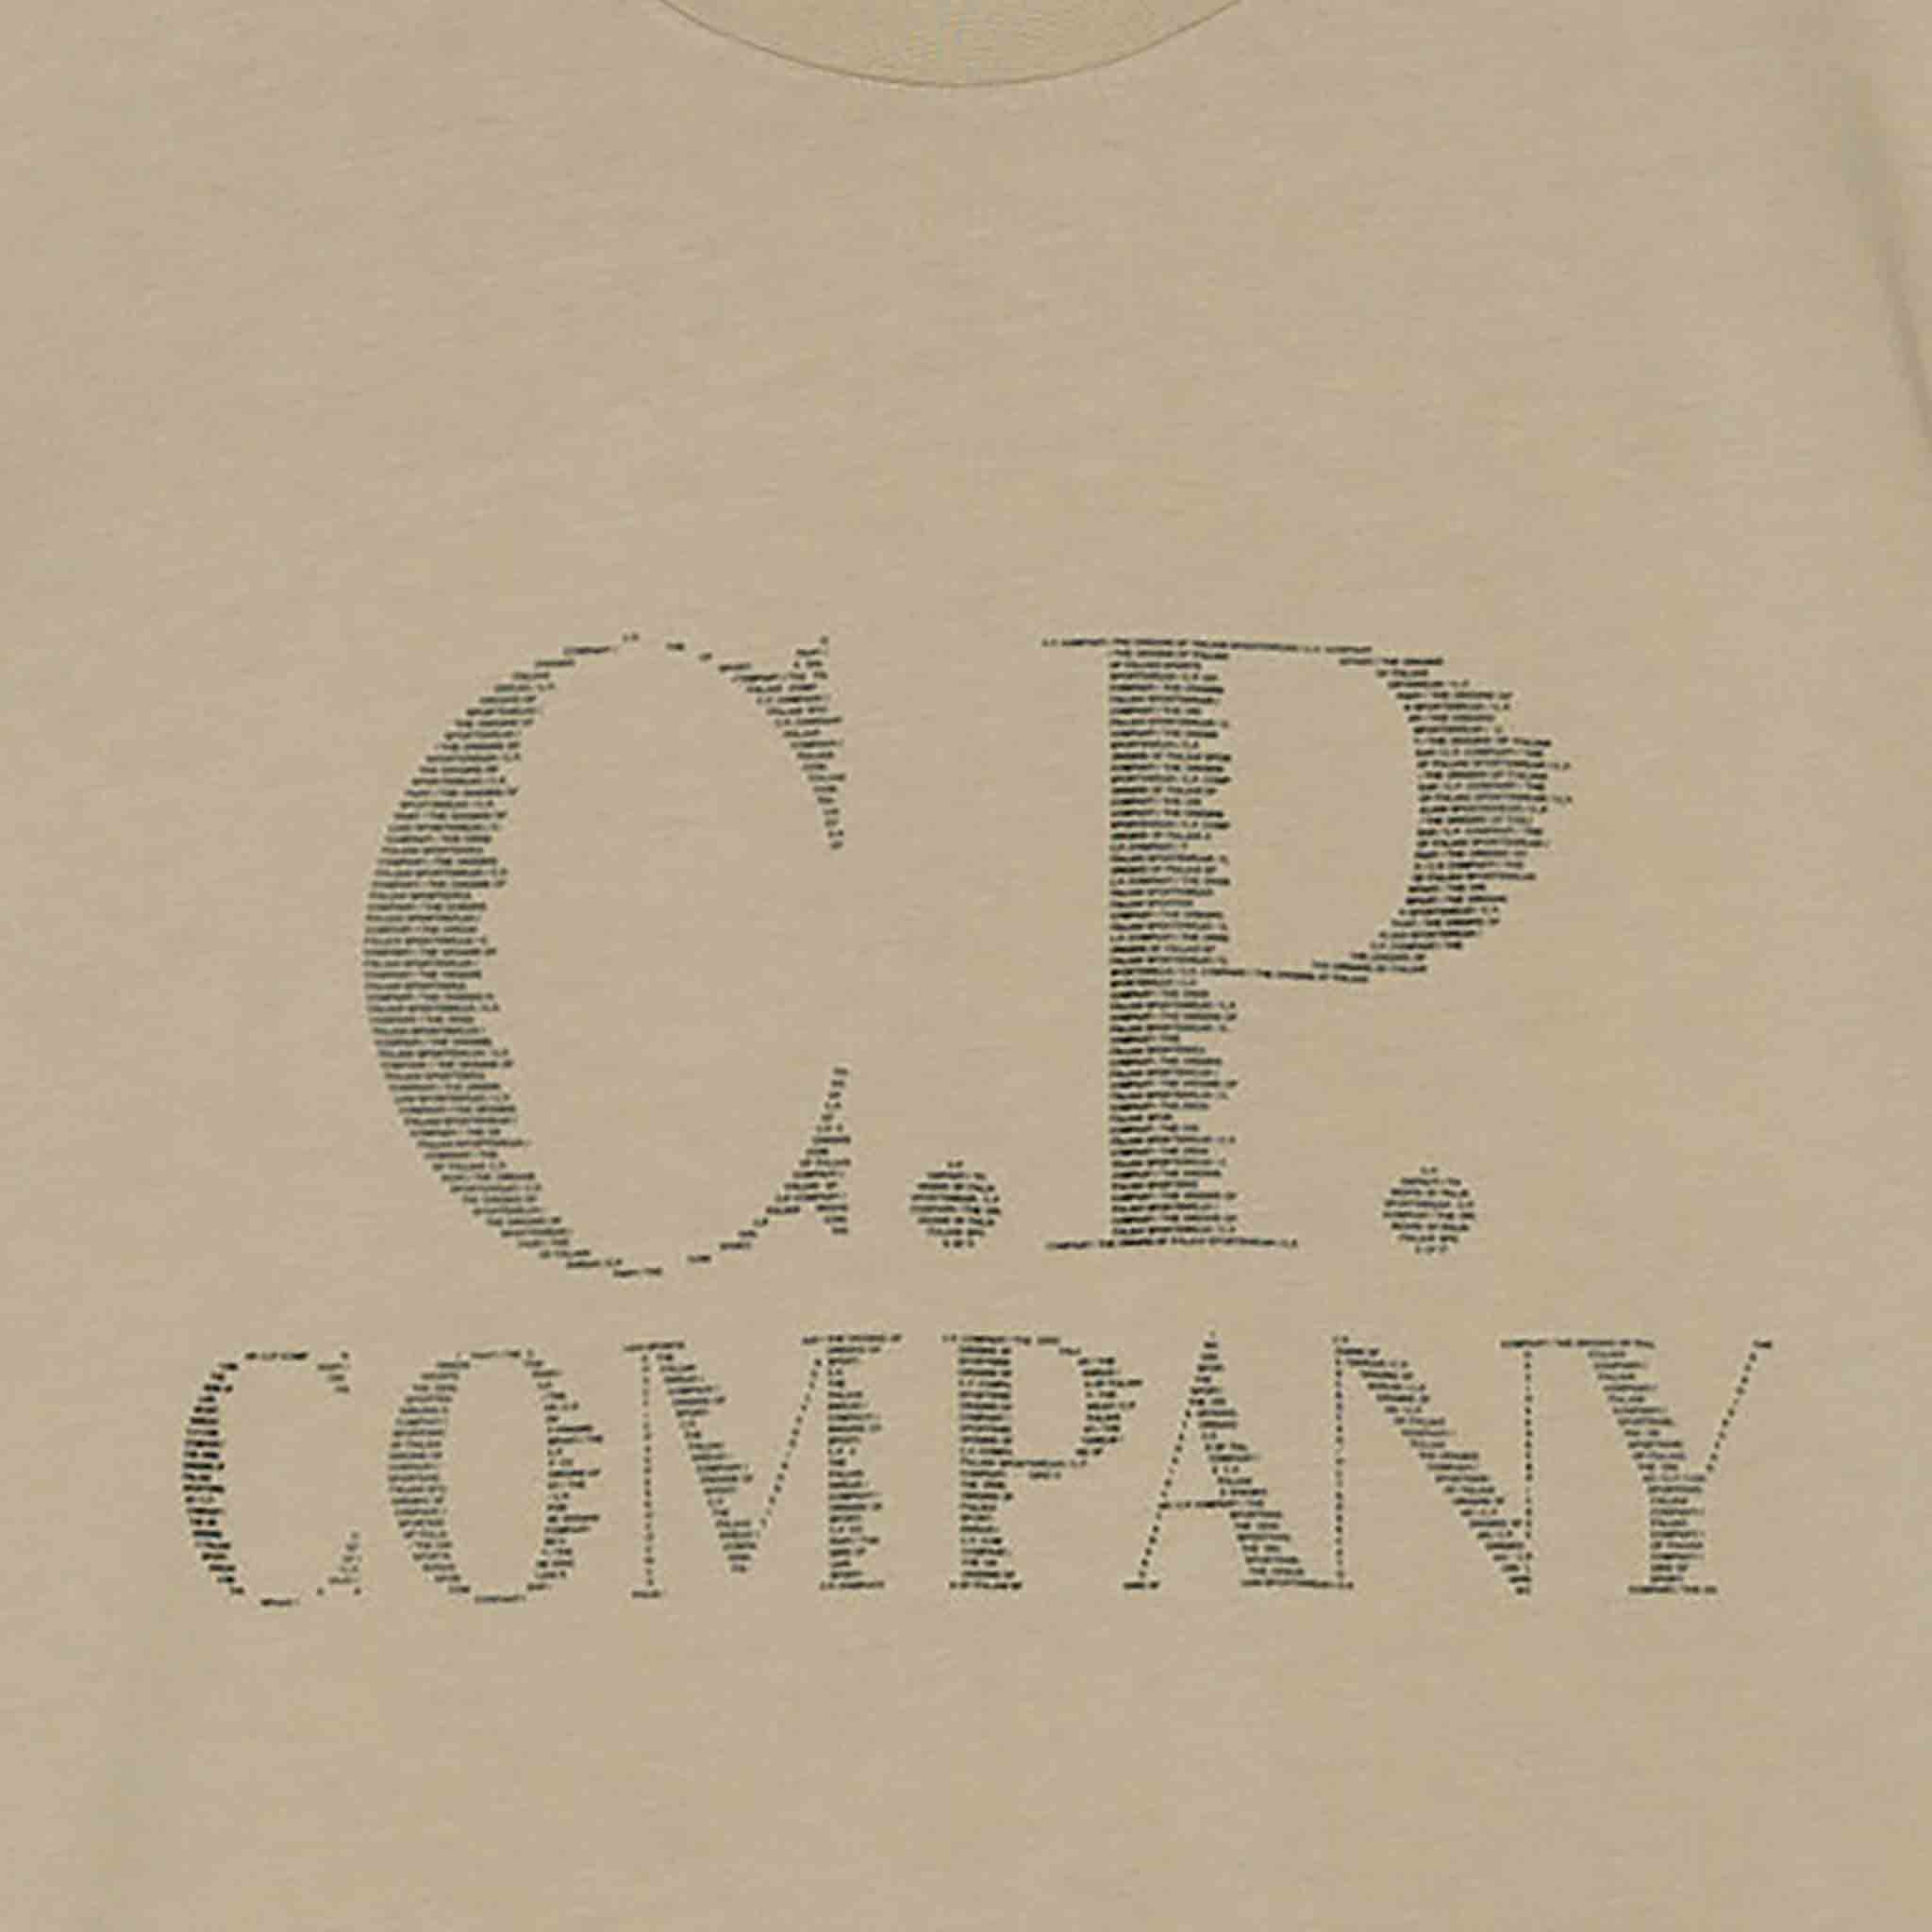 C.P. Company 30/1 Jersey Large Logo T-shirt in Cobblestone